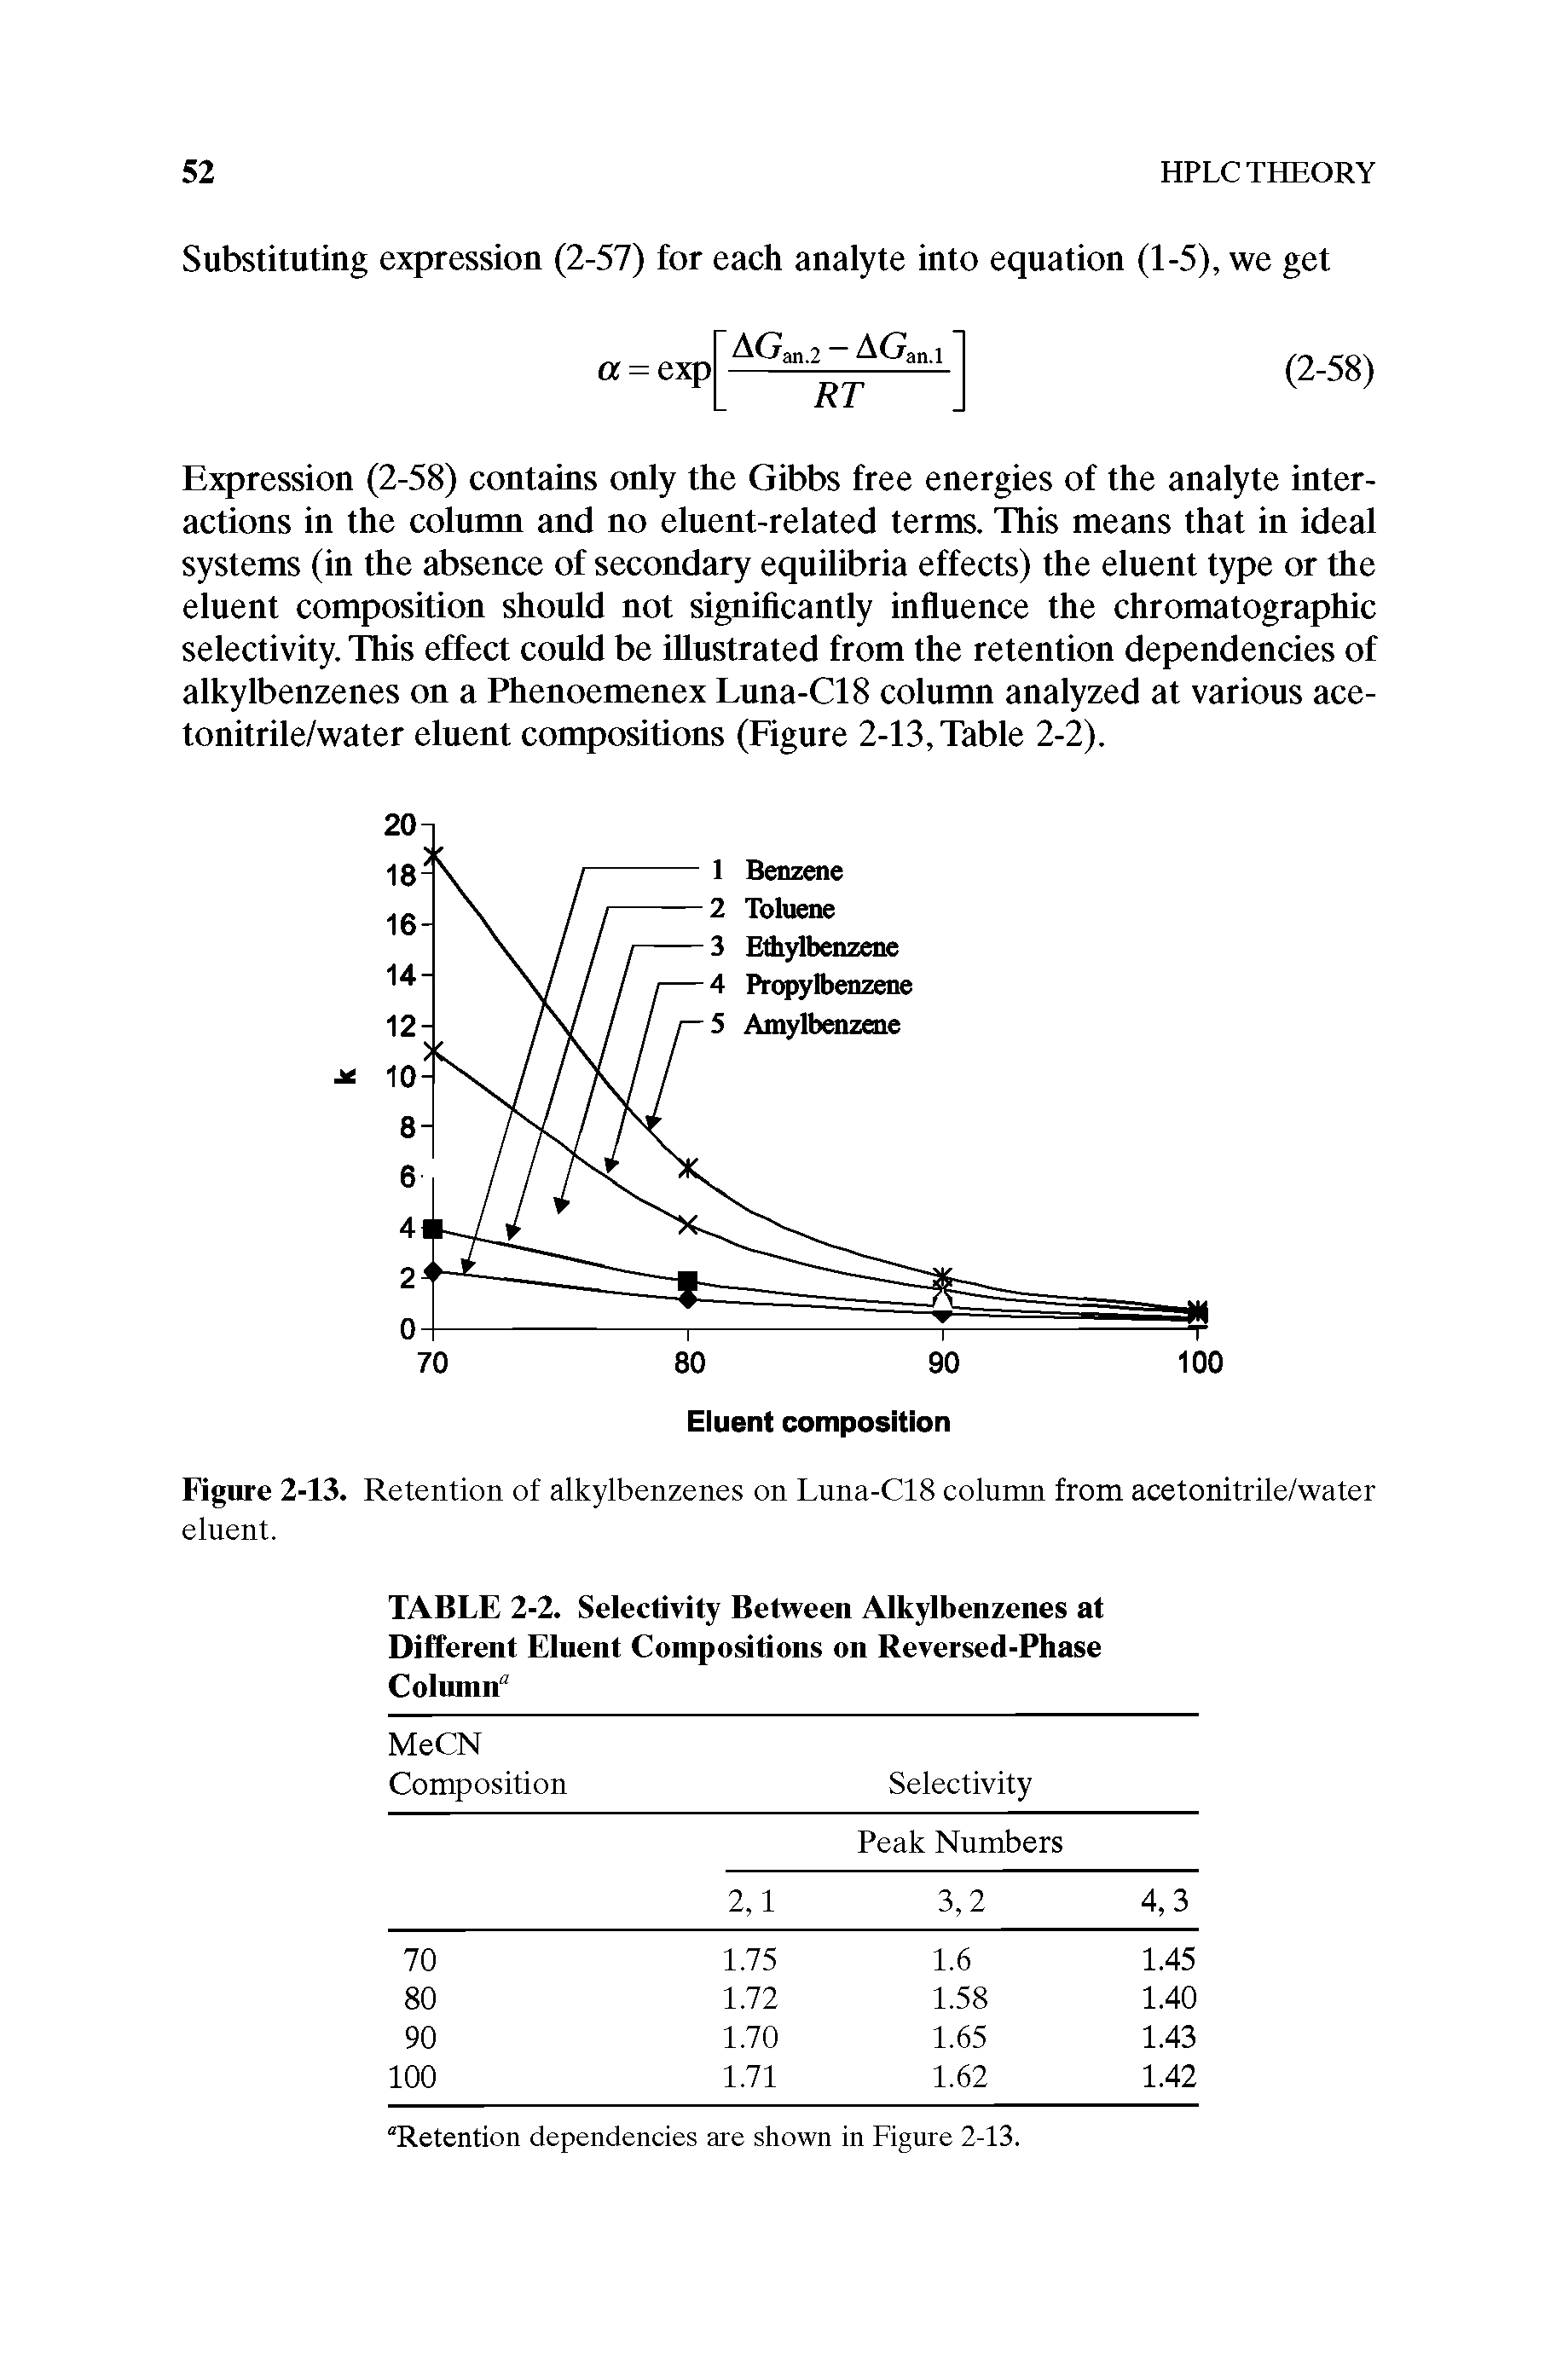 Figure 2-13. Retention of alkylbenzenes on Luna-C18 column from acetonitrile/water eluent.